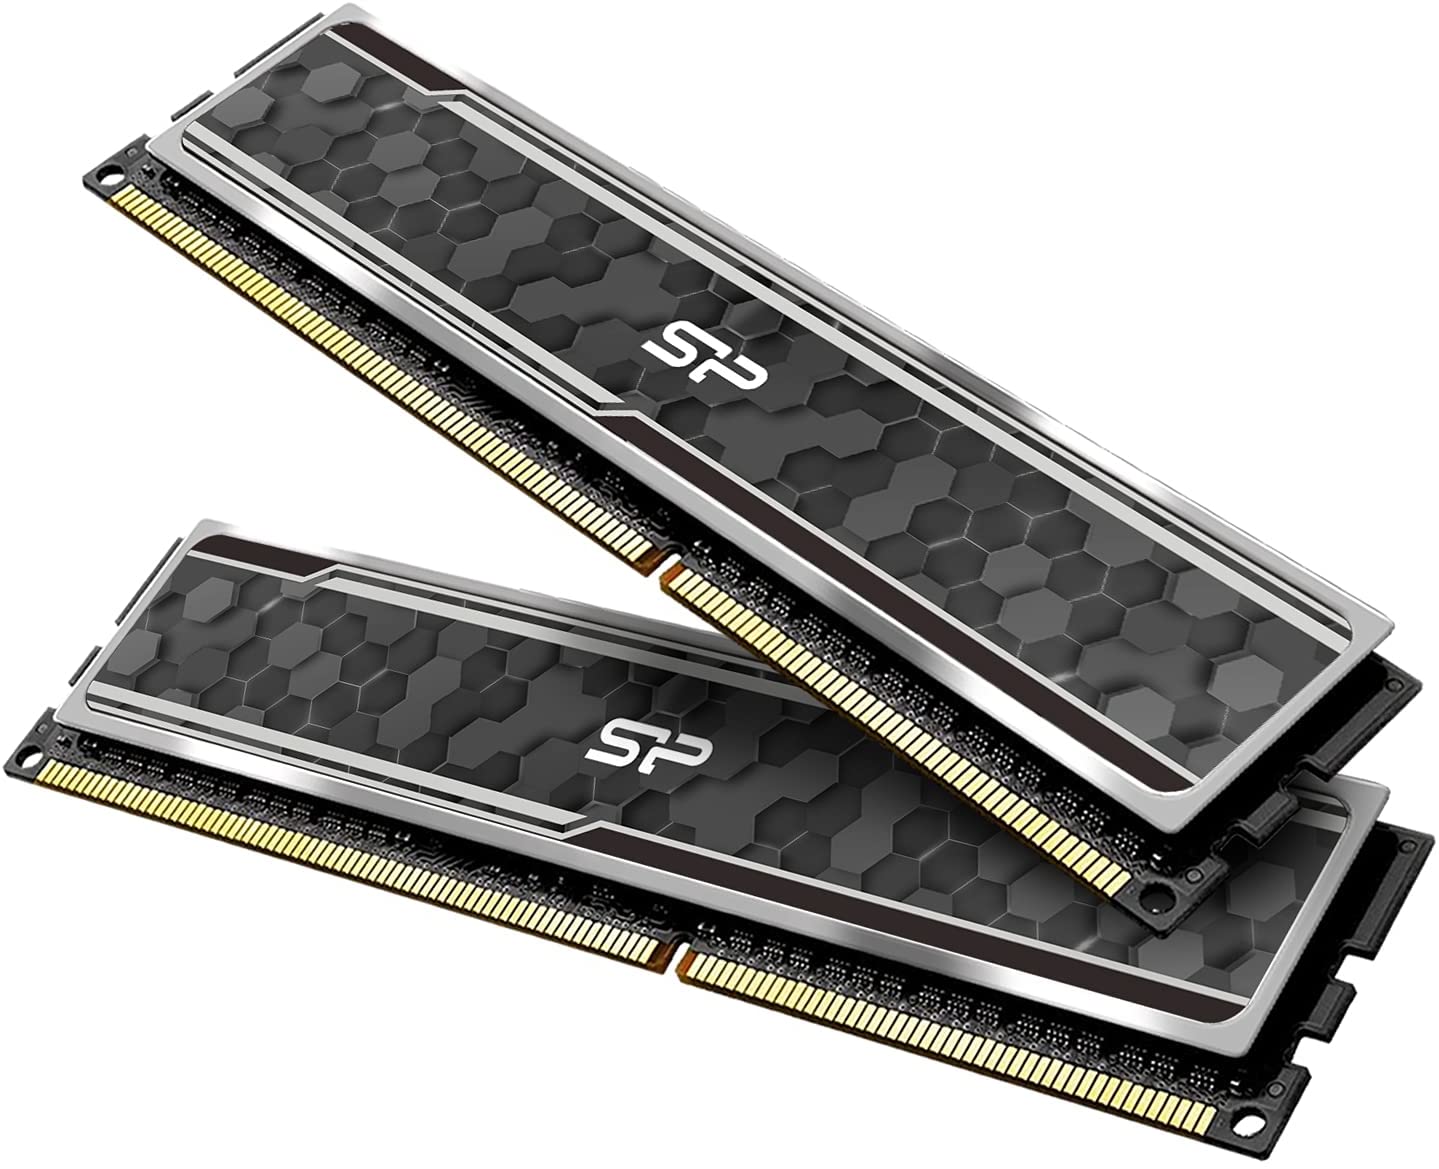 Silicon Power 16GB (2x8GB) Value Gaming Special Edition Desktop Memory 3000MHz DDR4 RAM SP016GXLZU300BDAJ7